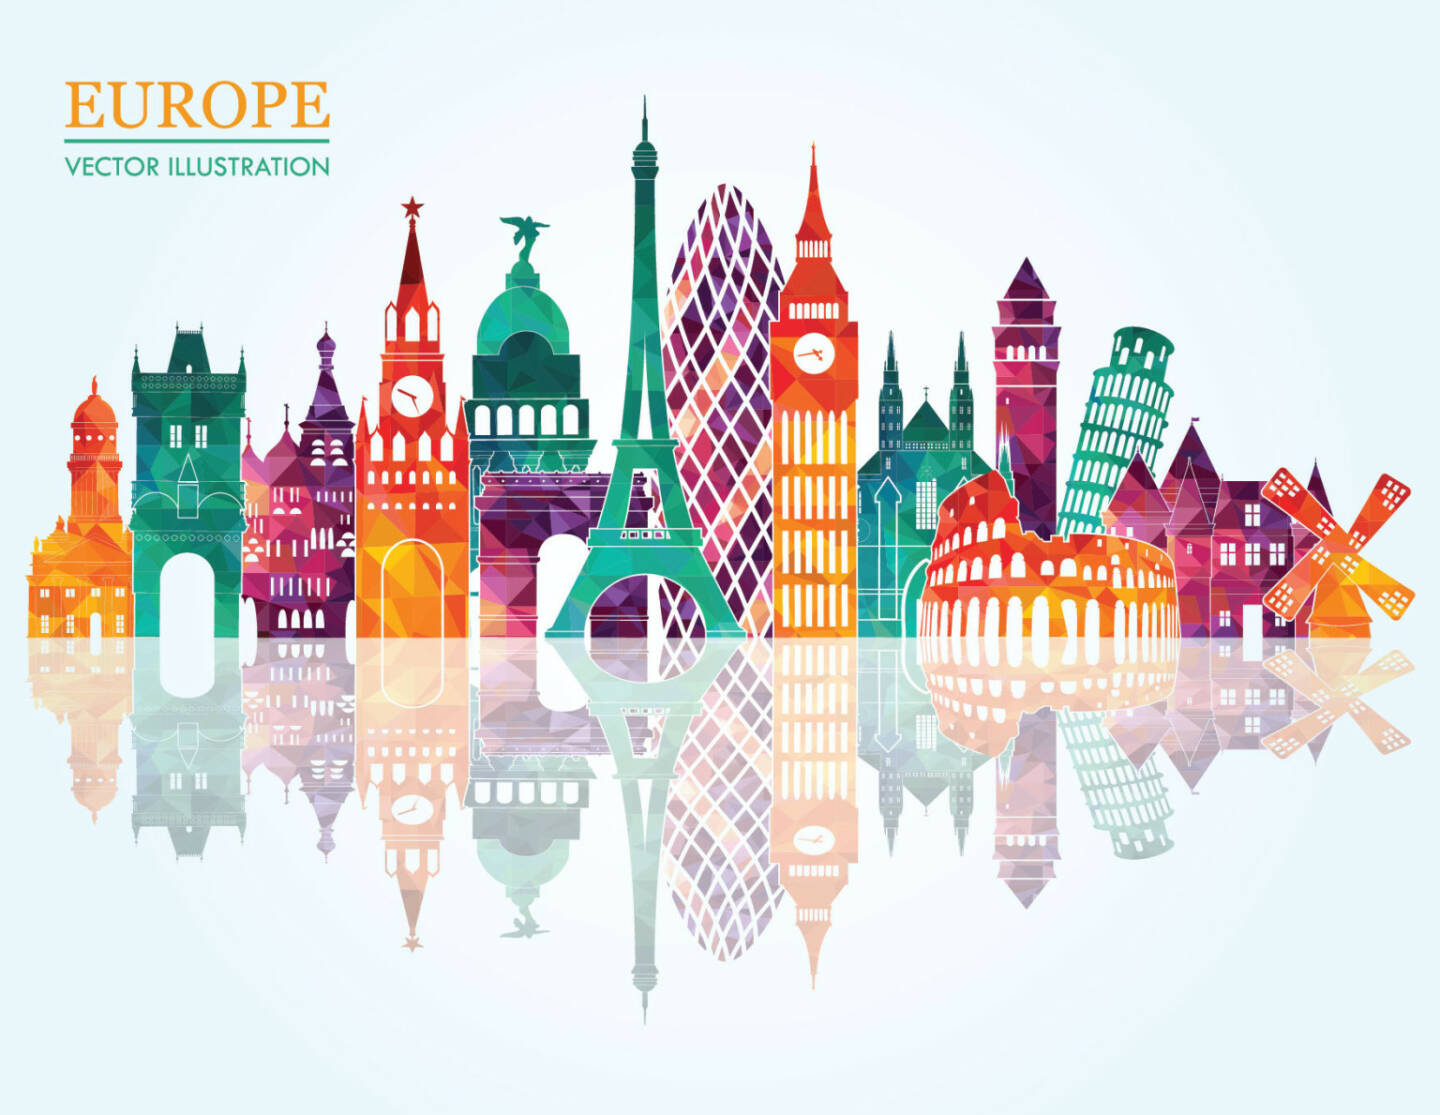 Europa, Wahrzeichen, Eifelturm, Big Ben, Turm von Pisa, http://www.shutterstock.com/de/pic-238249900/stock-vector-europe-skyline-detailed-silhouette-vector-illustration.html